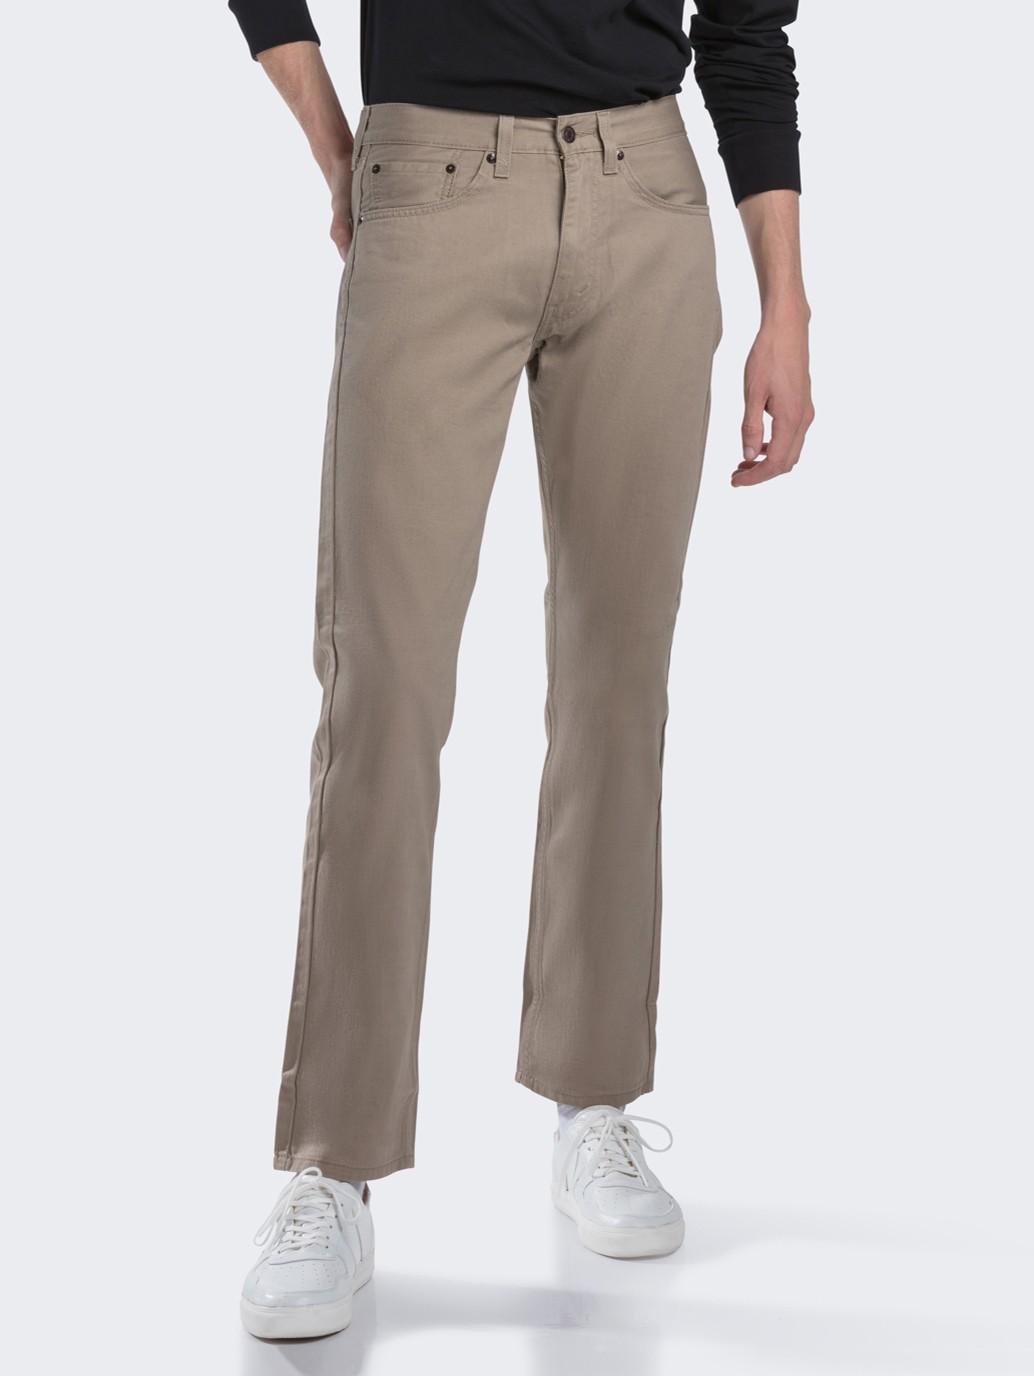 Levi's® MY 505™ Regular Fit Pants for Men - 005050718